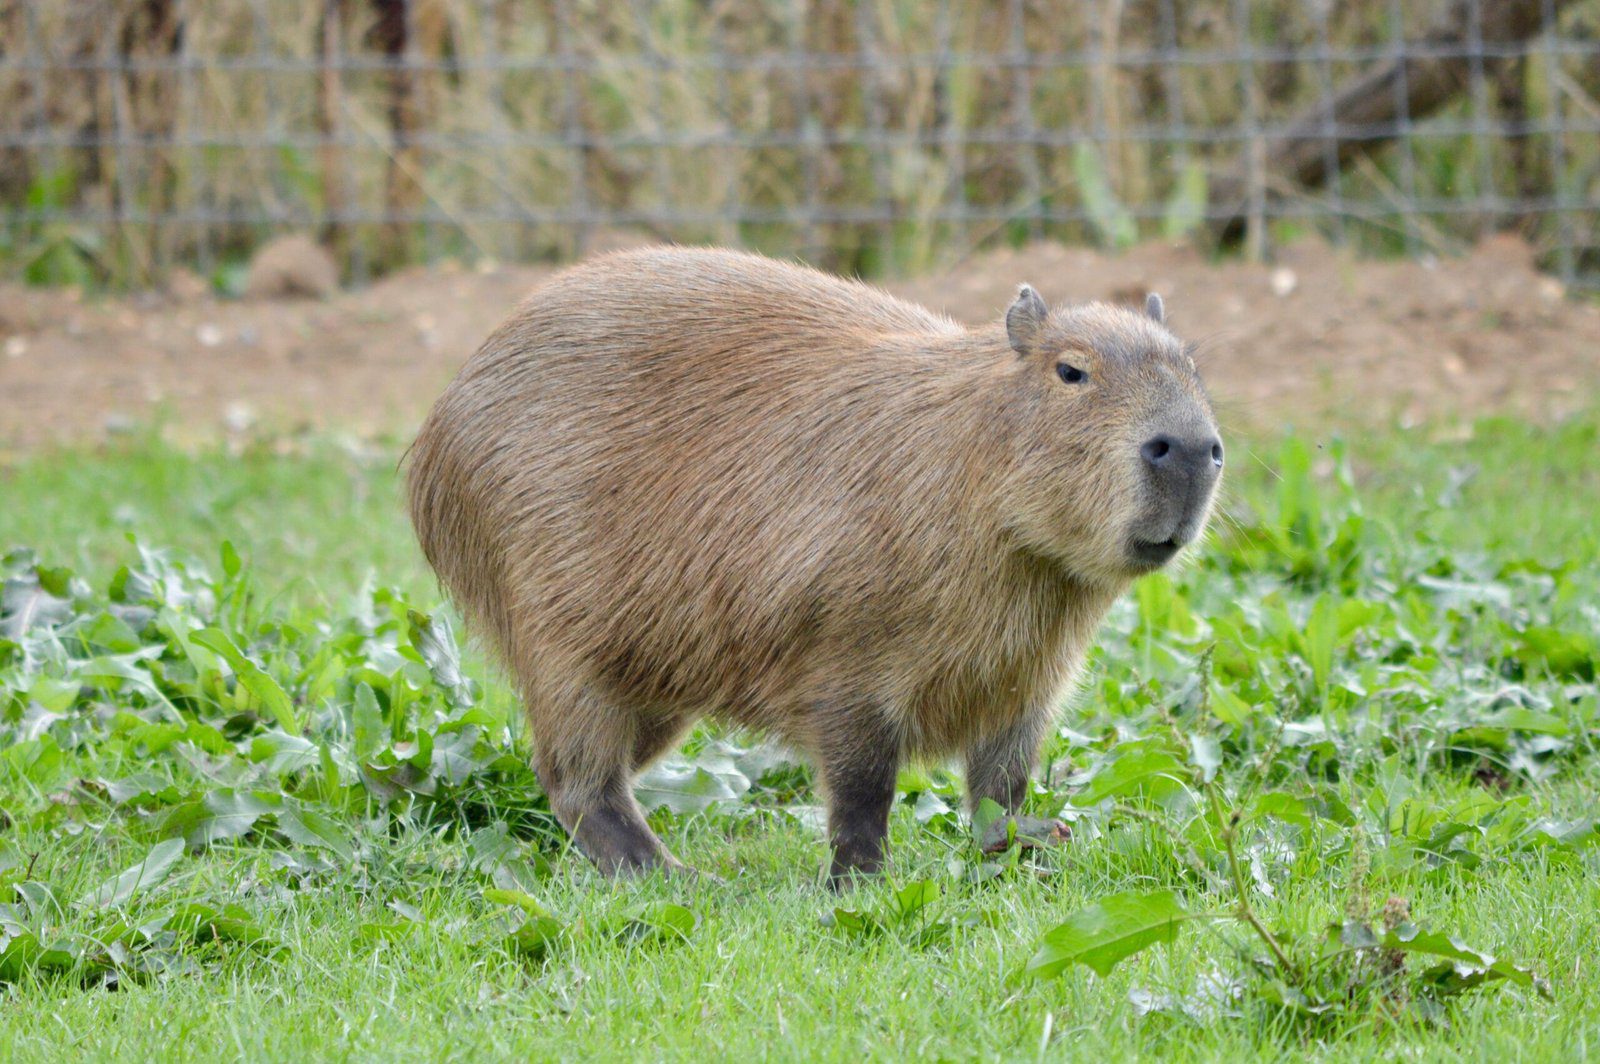 Where to Spot Capybaras in the Wild